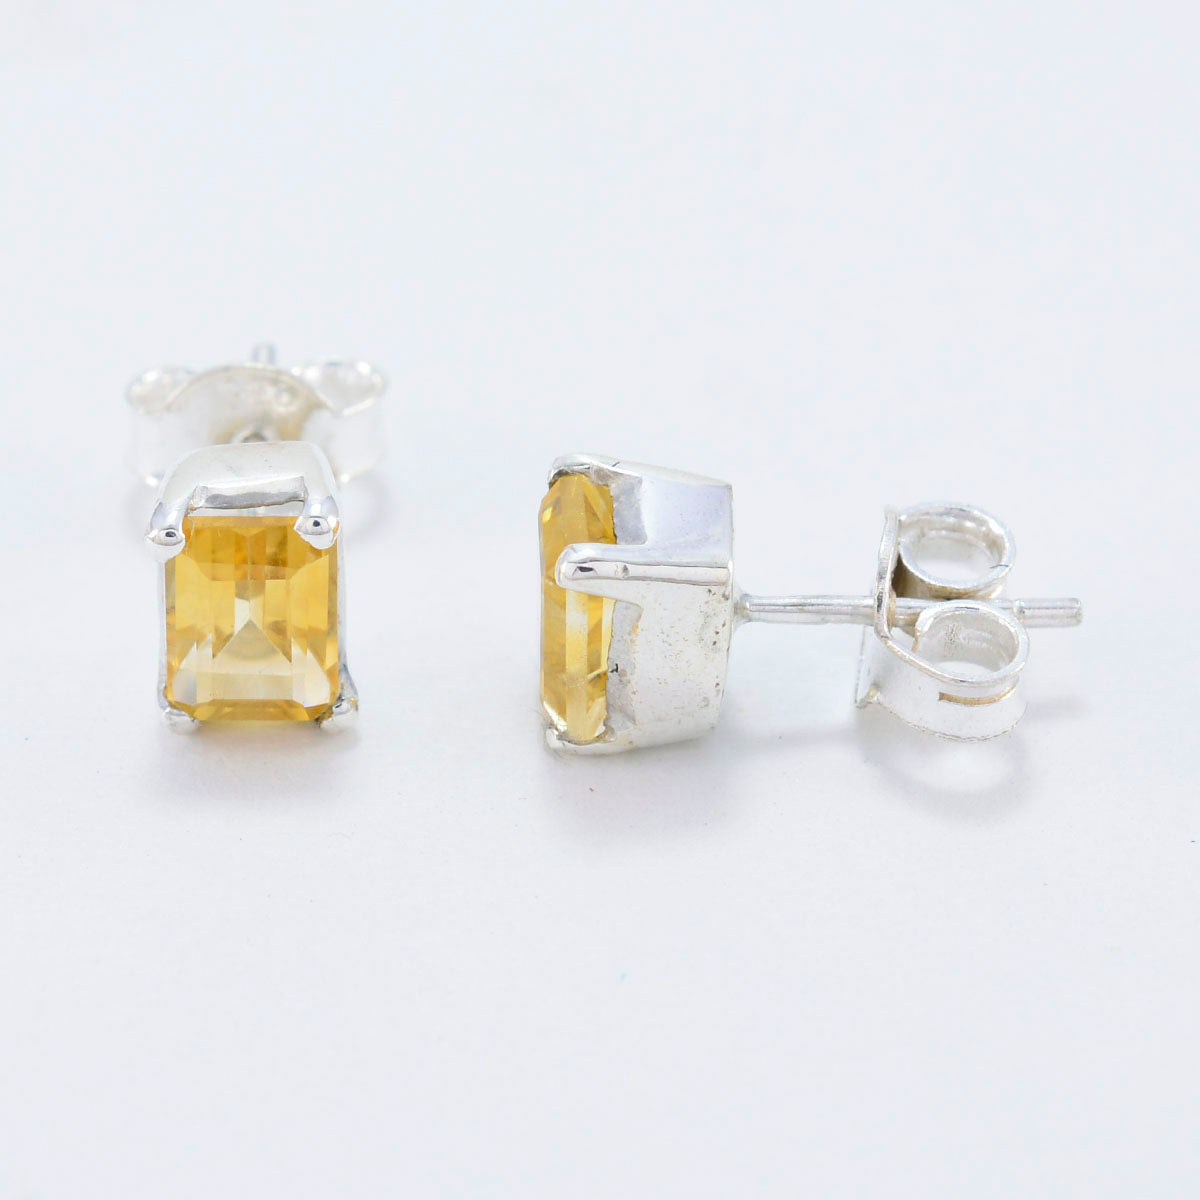 Riyo hinreißender Sterlingsilber-Ohrring für Frau, Citrin-Ohrring, Lünettenfassung, gelber Ohrring, Ohrstecker